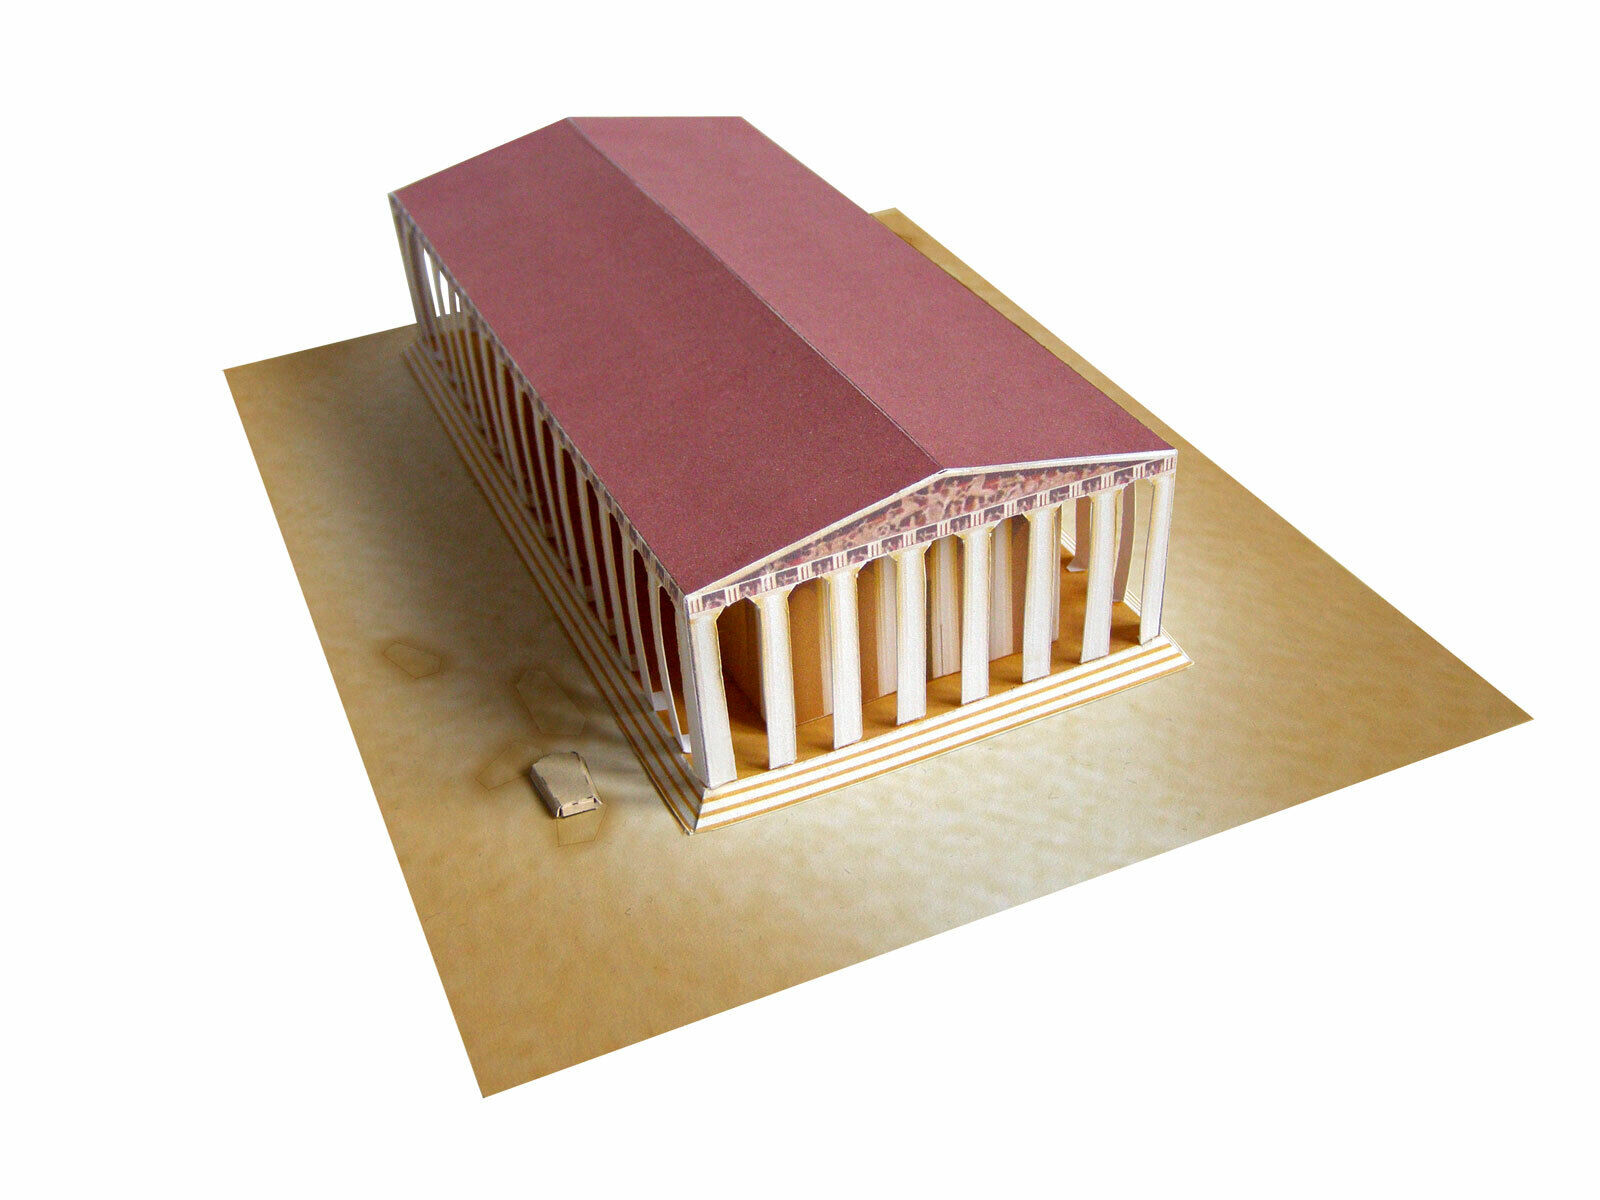 Parthenon - Acropolis in Athens, Greece - Paper Model